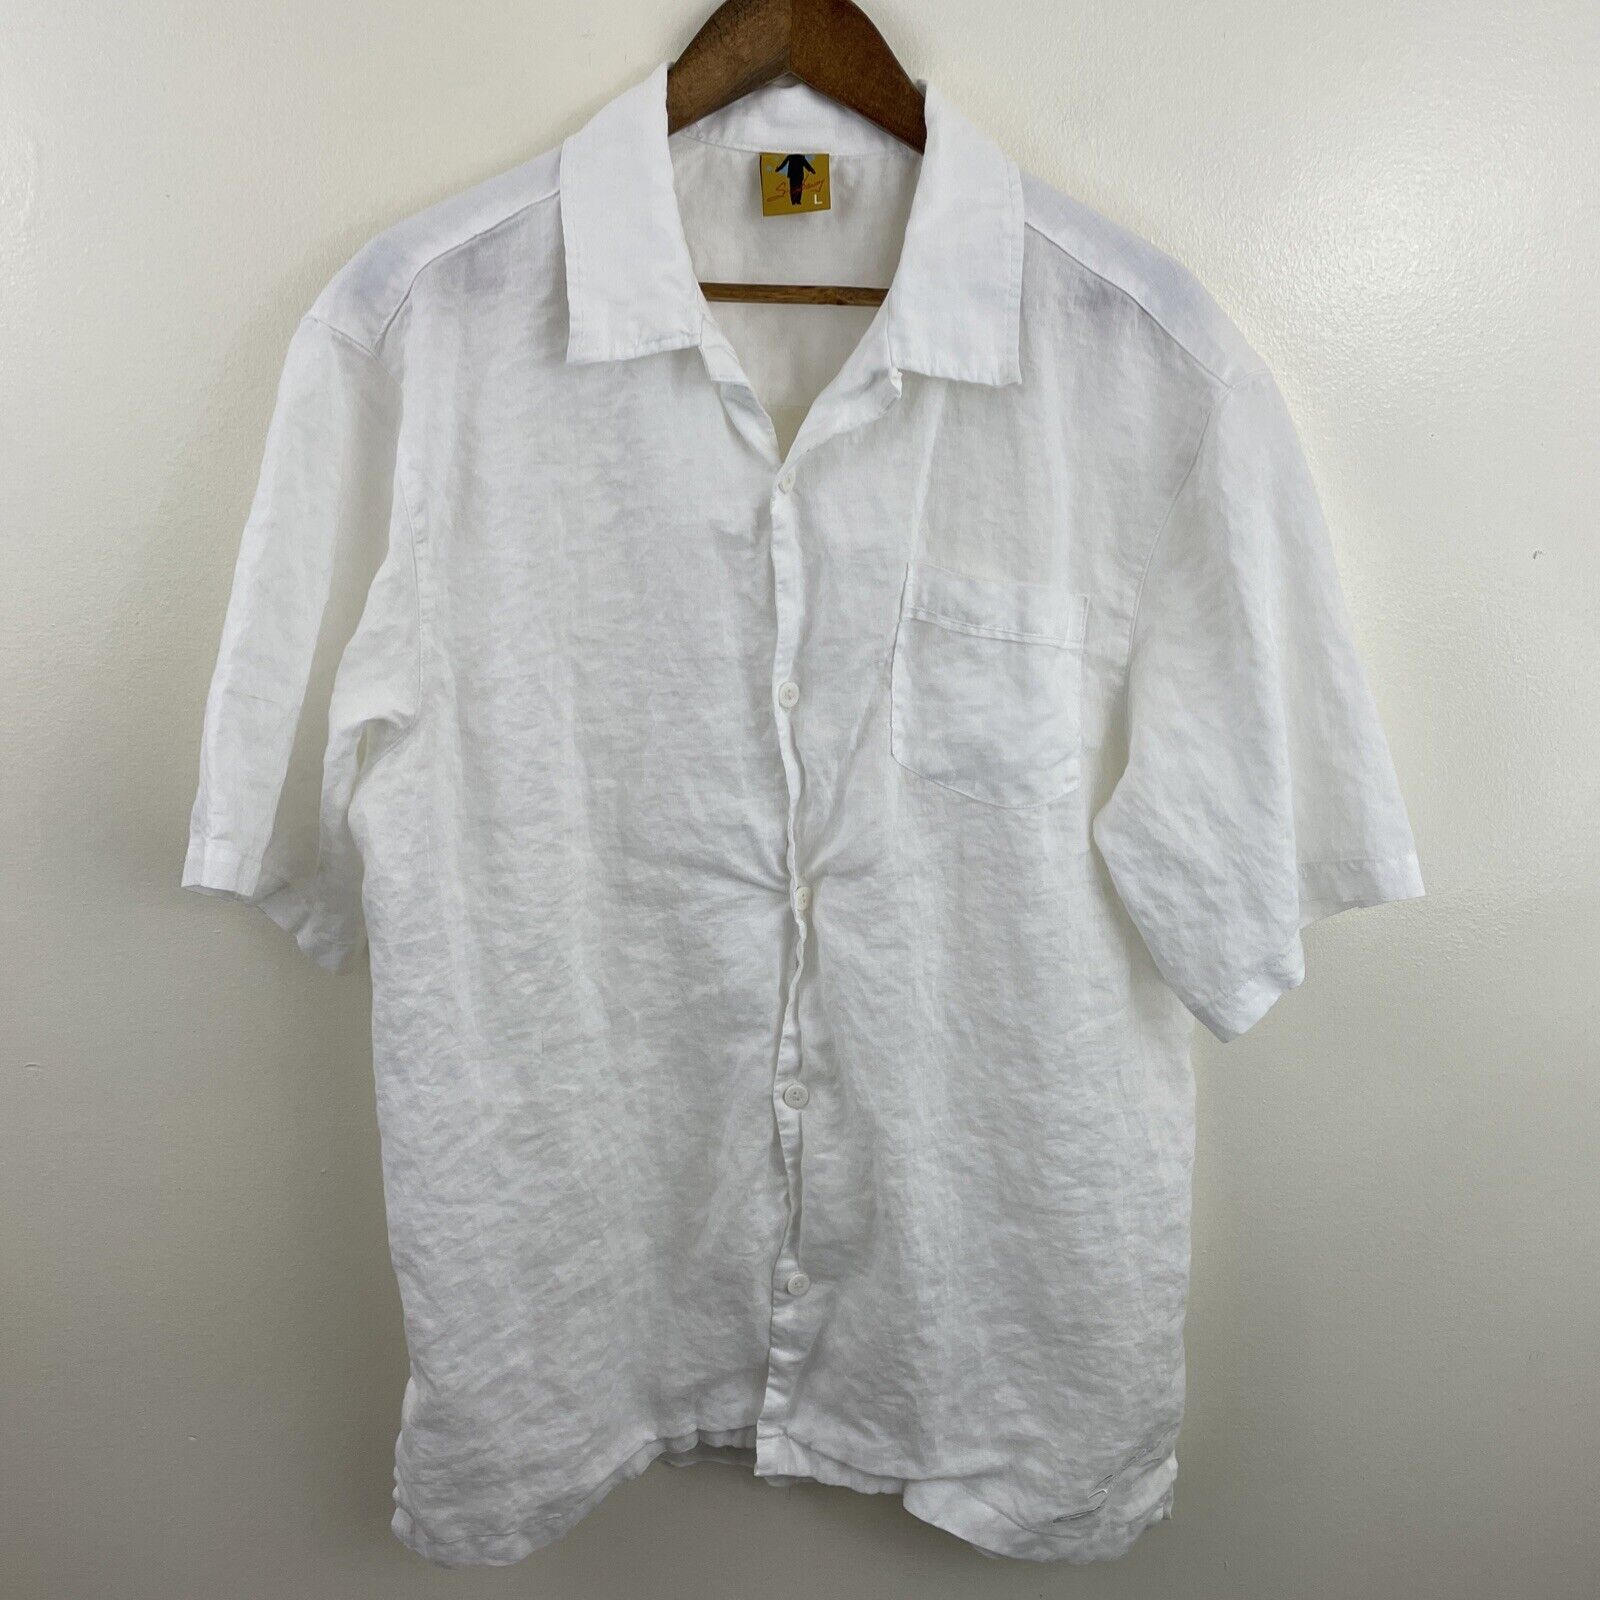 Steve Harvey Linen Shirt Mens L White Short Sleeve Button Classic